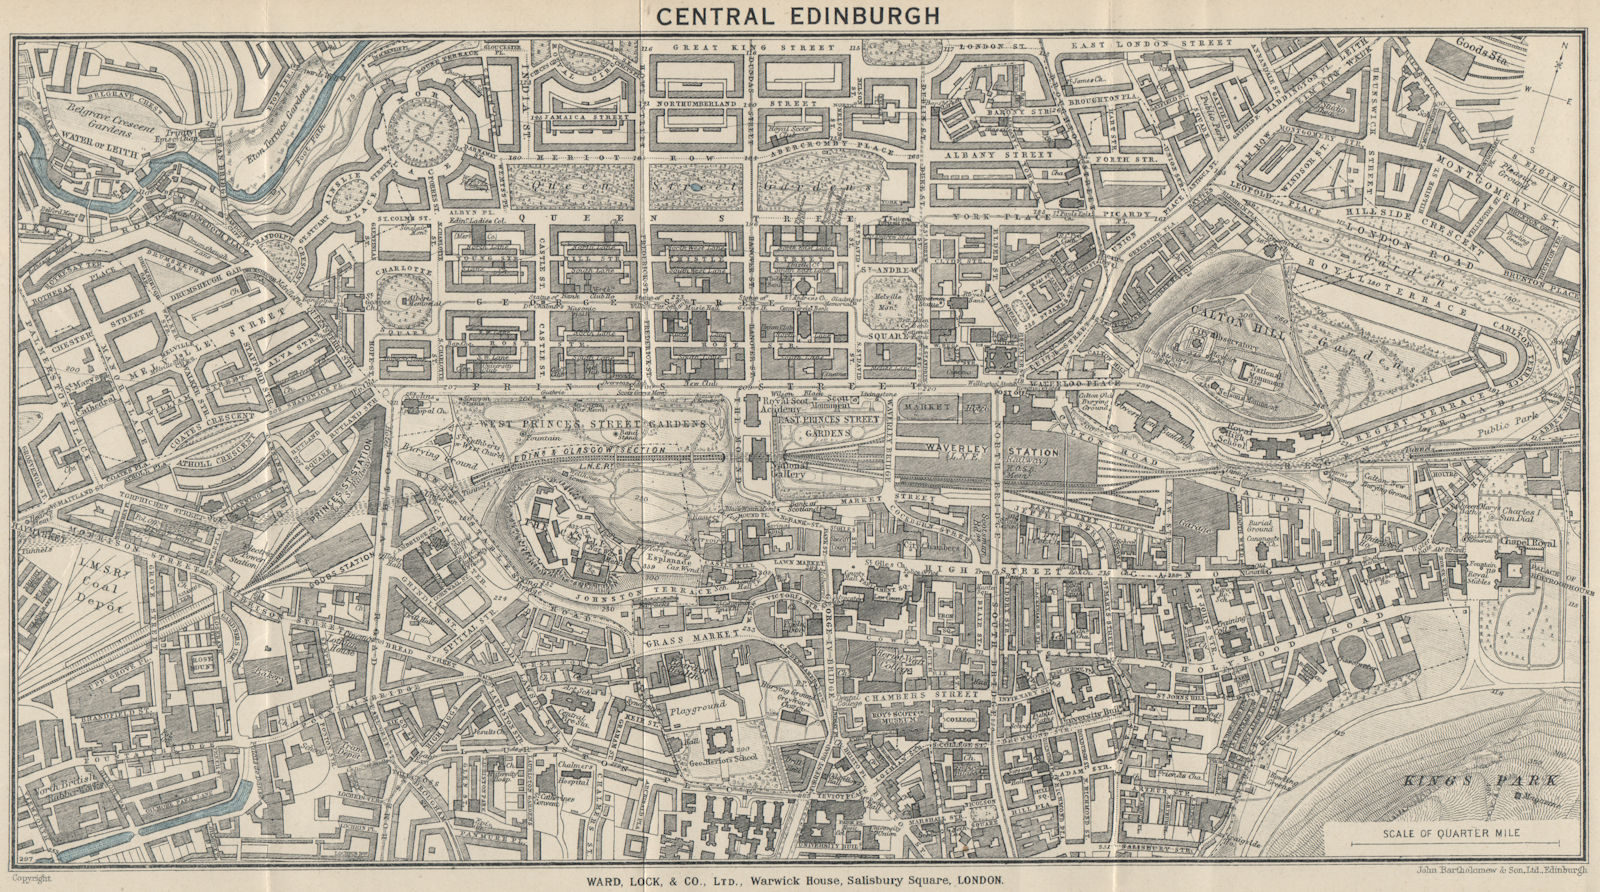 CENTRAL EDINBURGH vintage town/city plan. Scotland. WARD LOCK 1939 old map